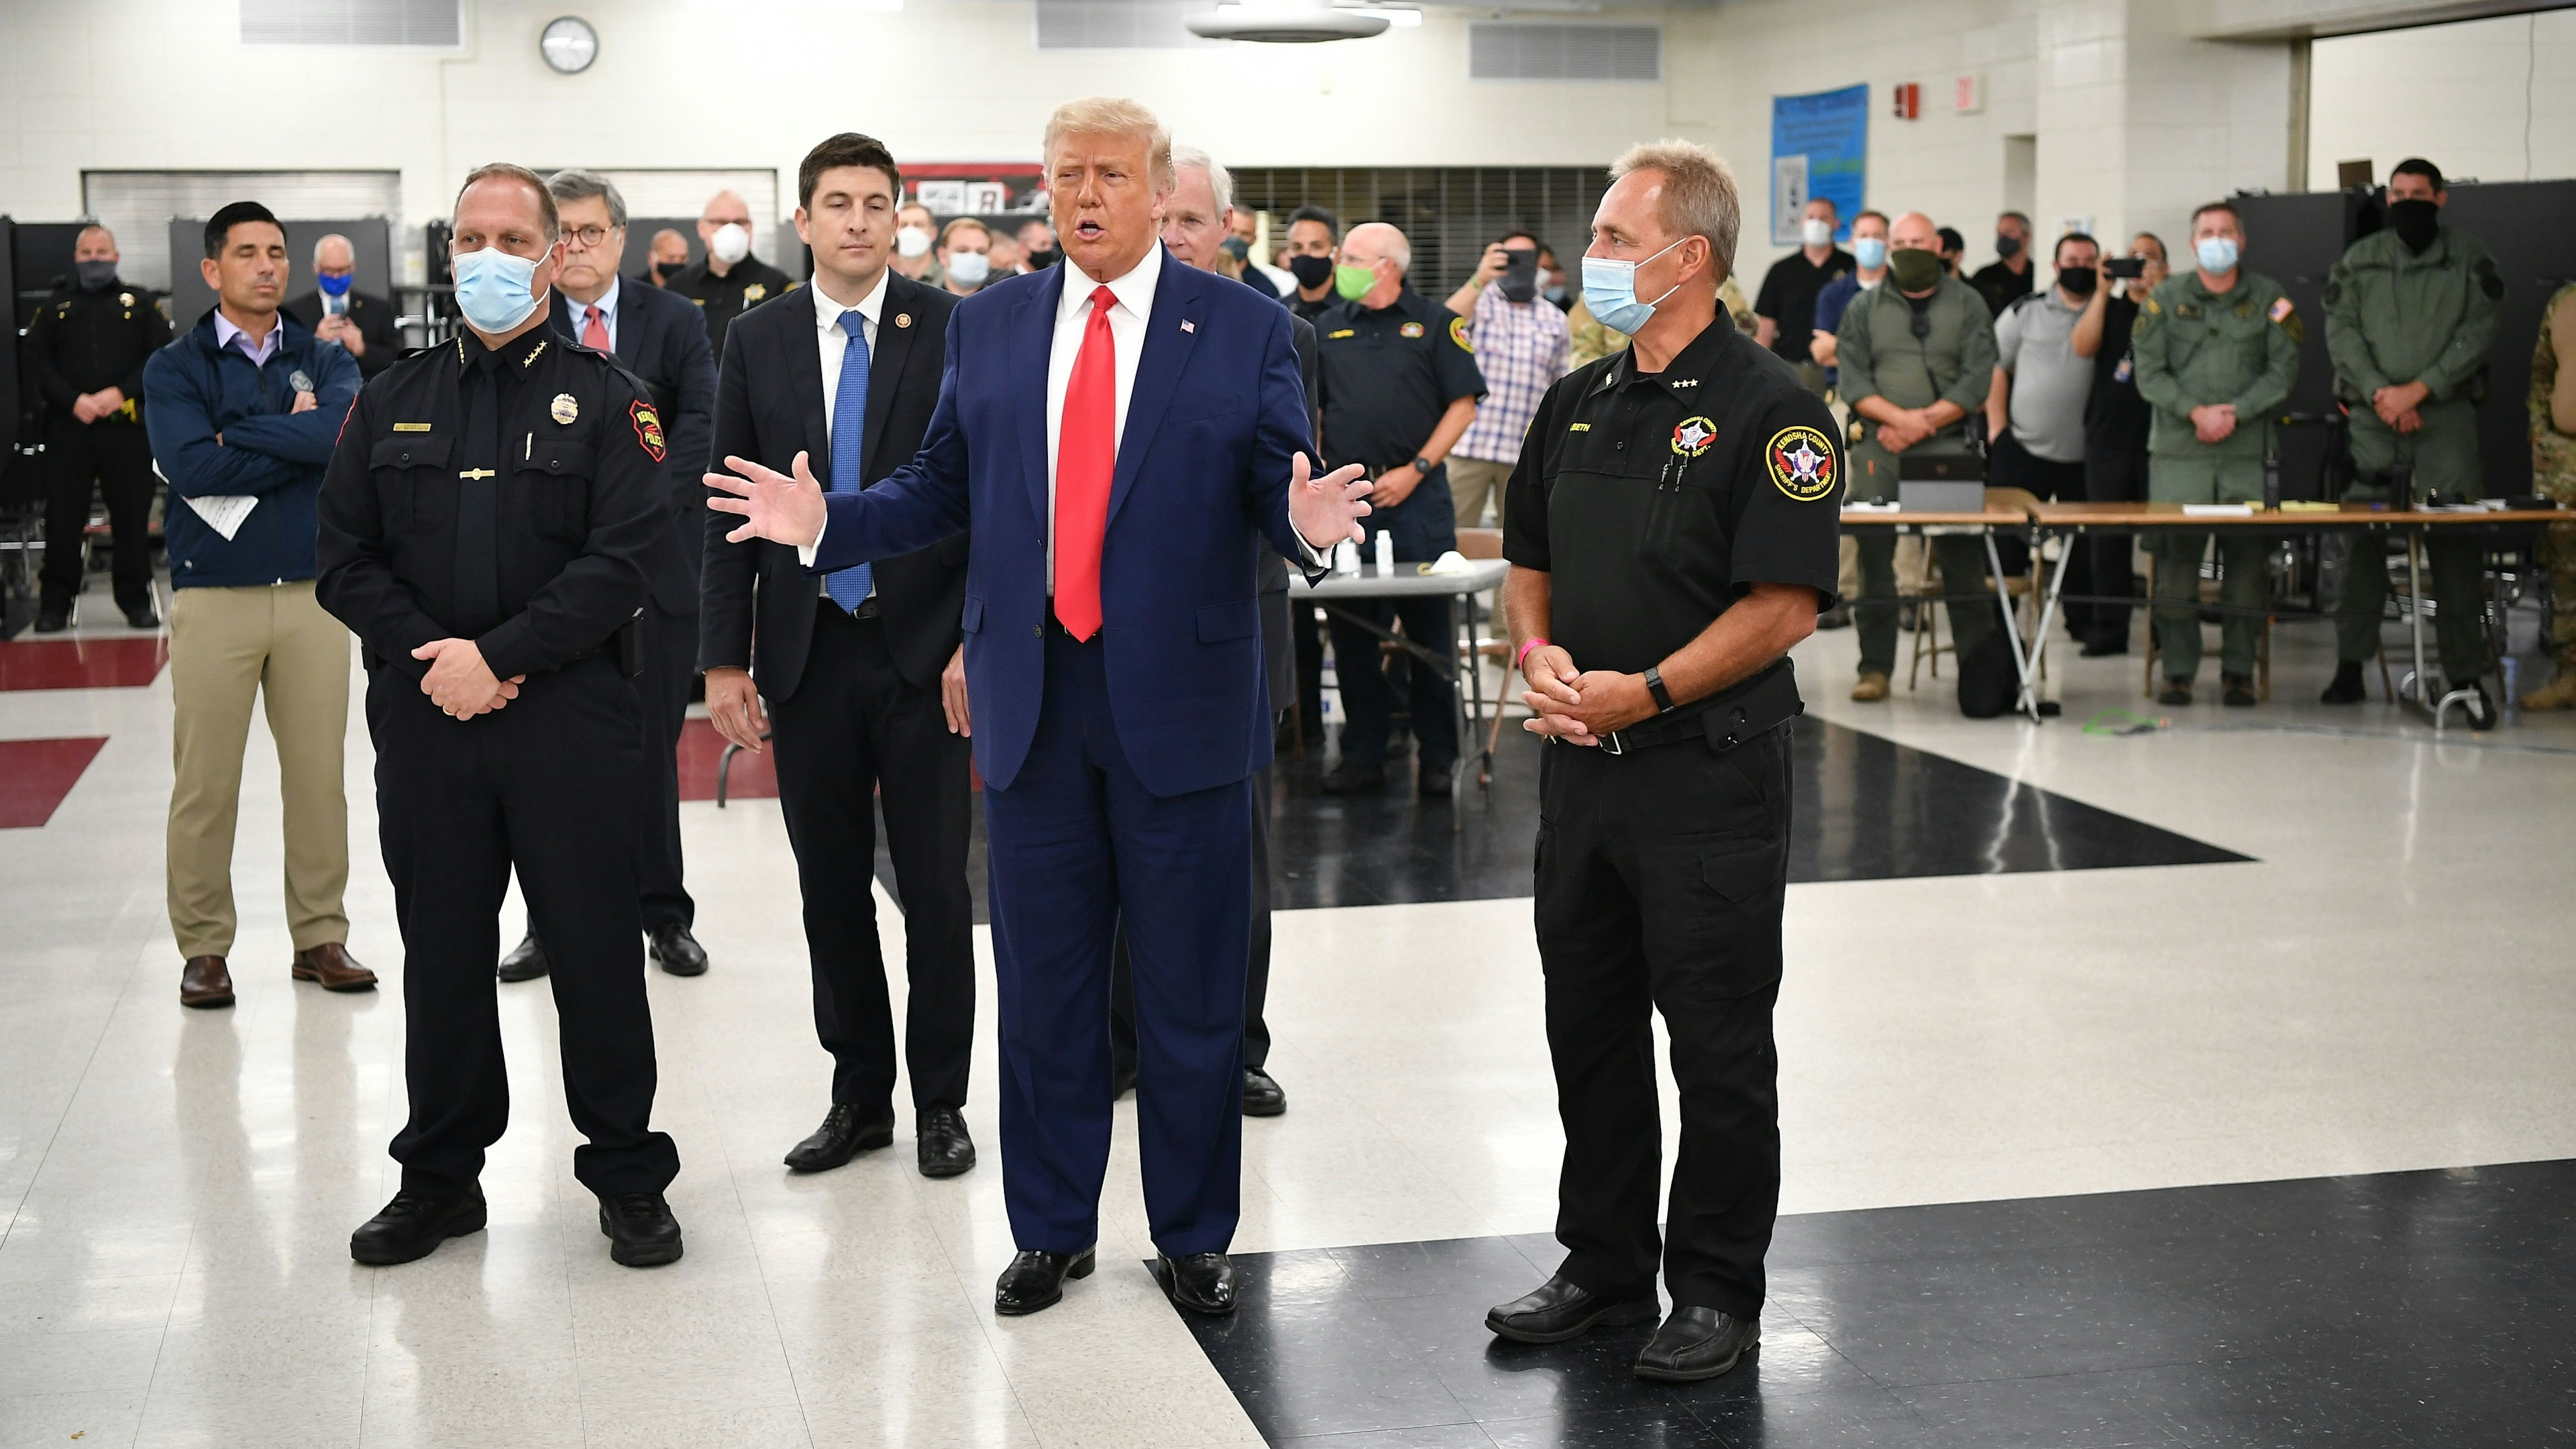 President Donald Trump speaks with officials on September 1, 2020, at Mary D. Bradford High School in Kenosha, Wisconsin